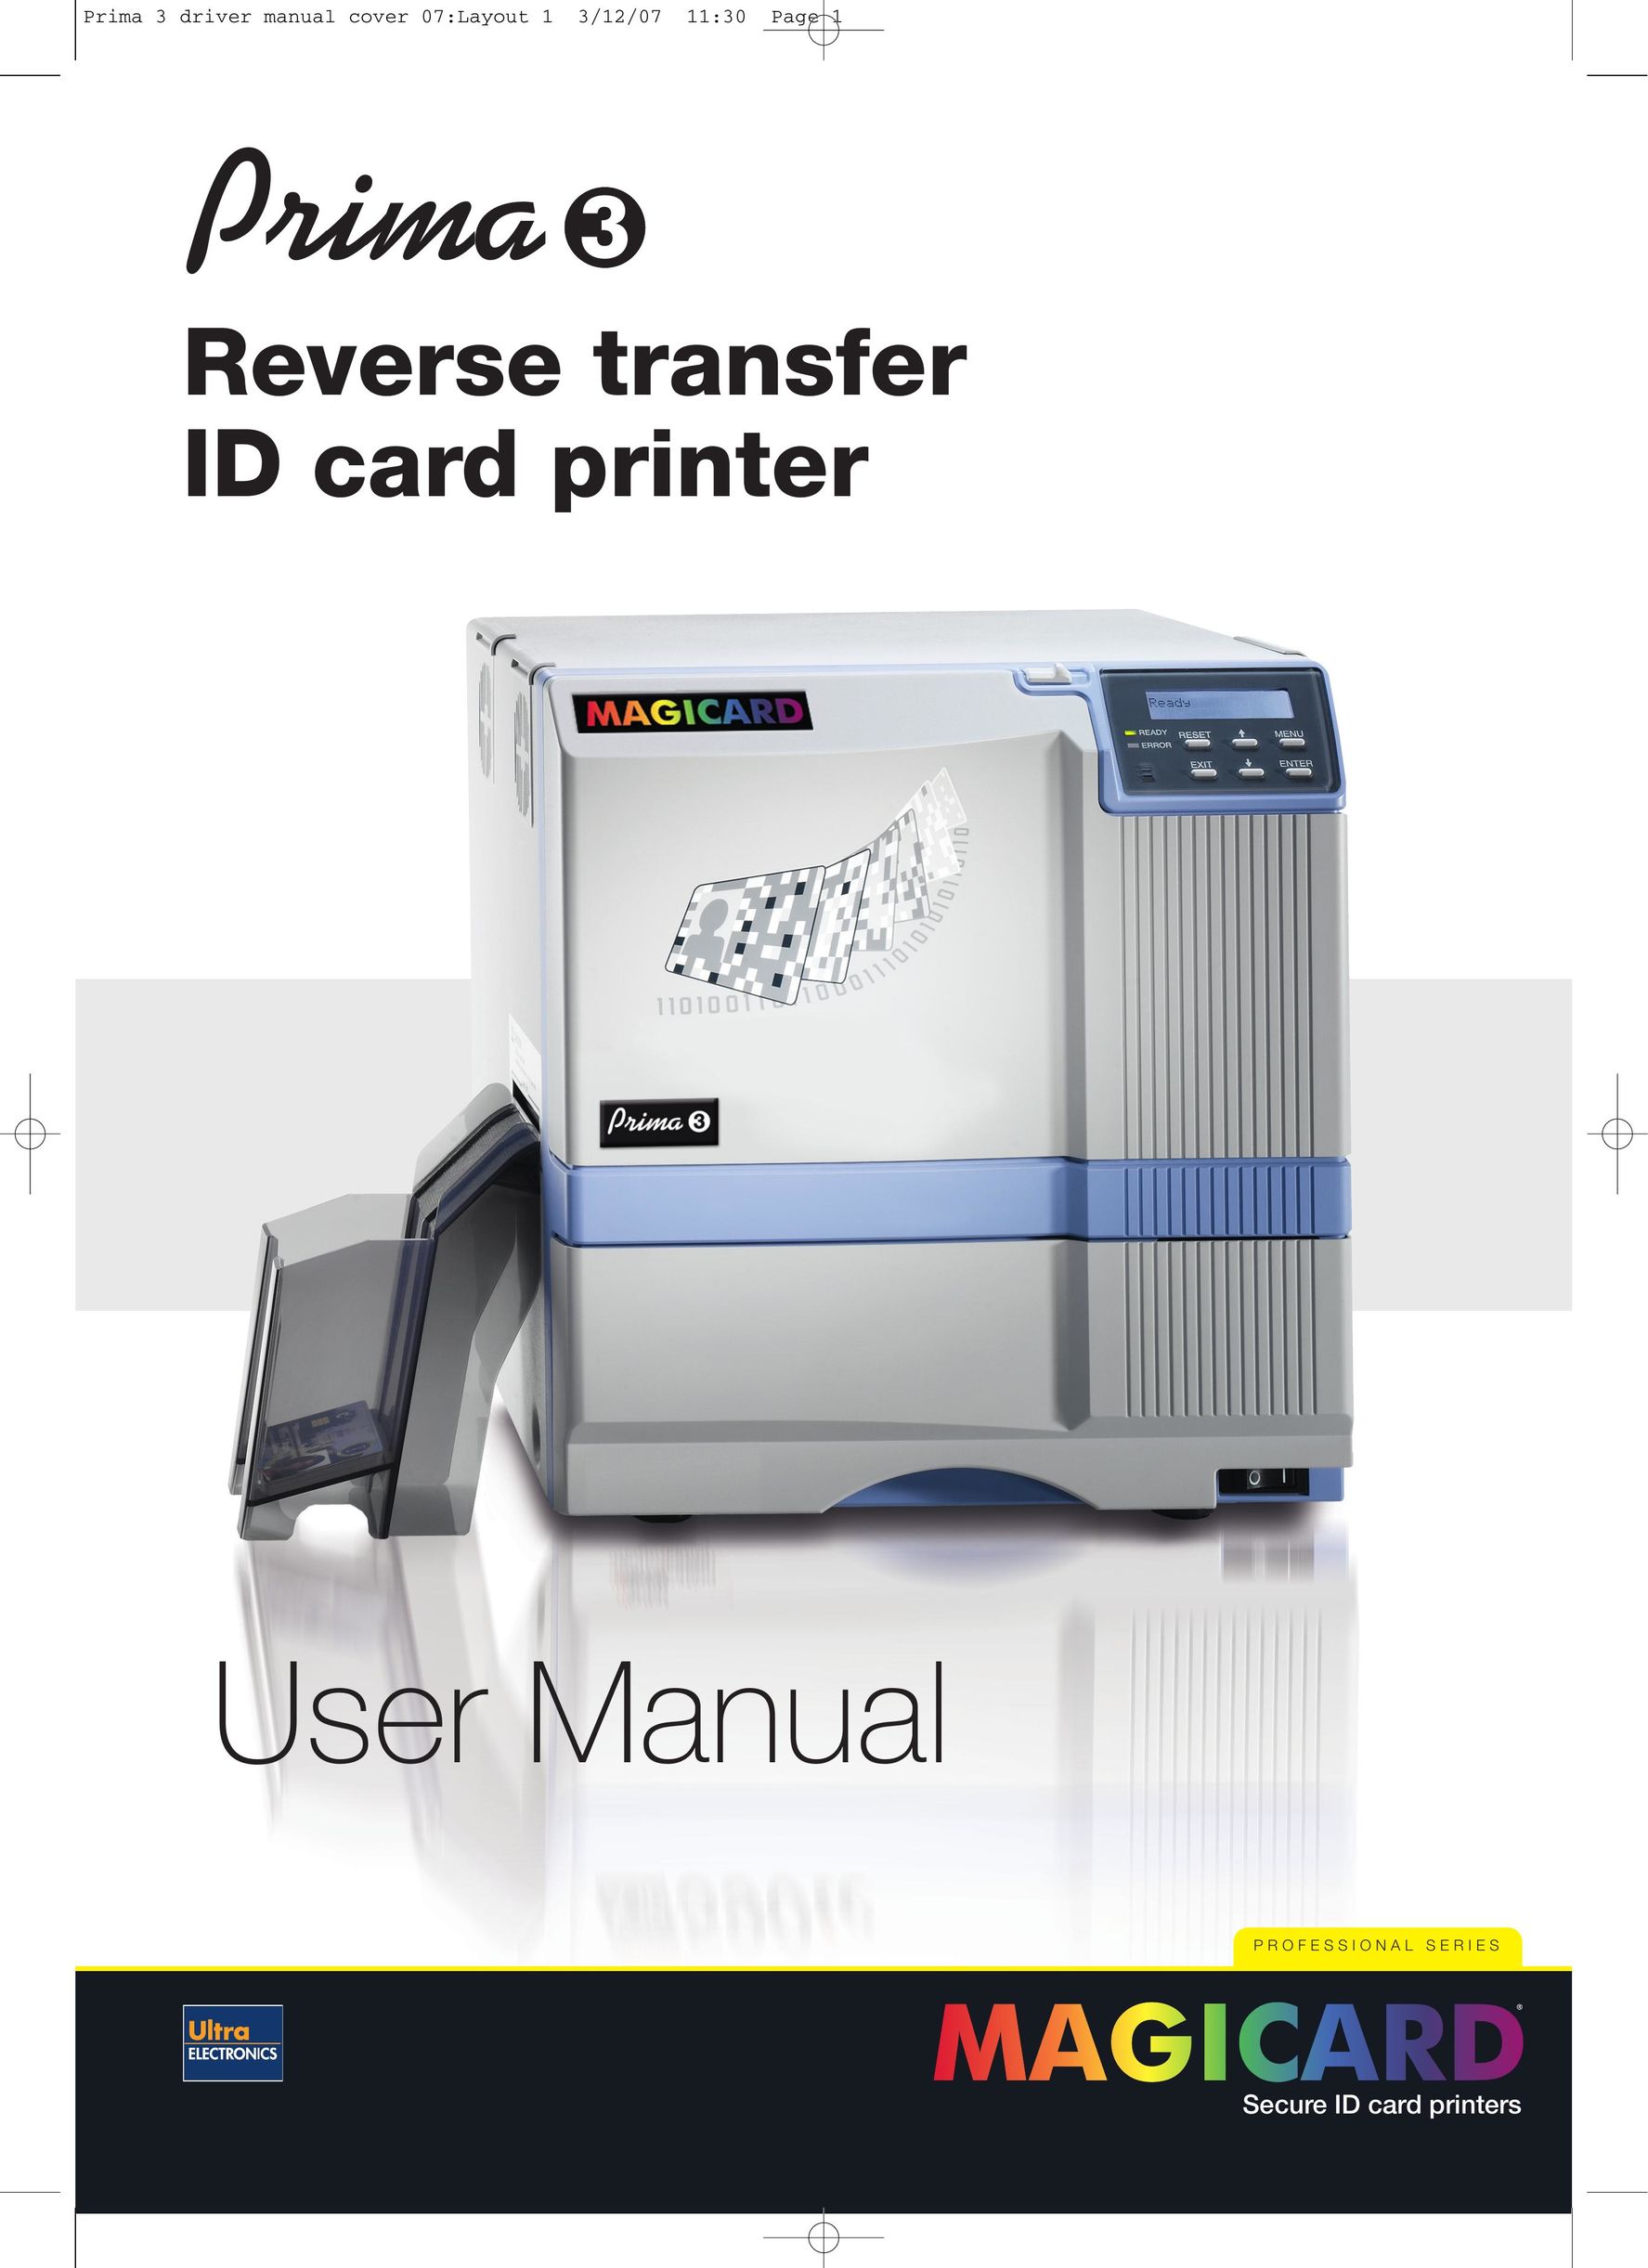 Ultra electronic Prima 3 Printer User Manual